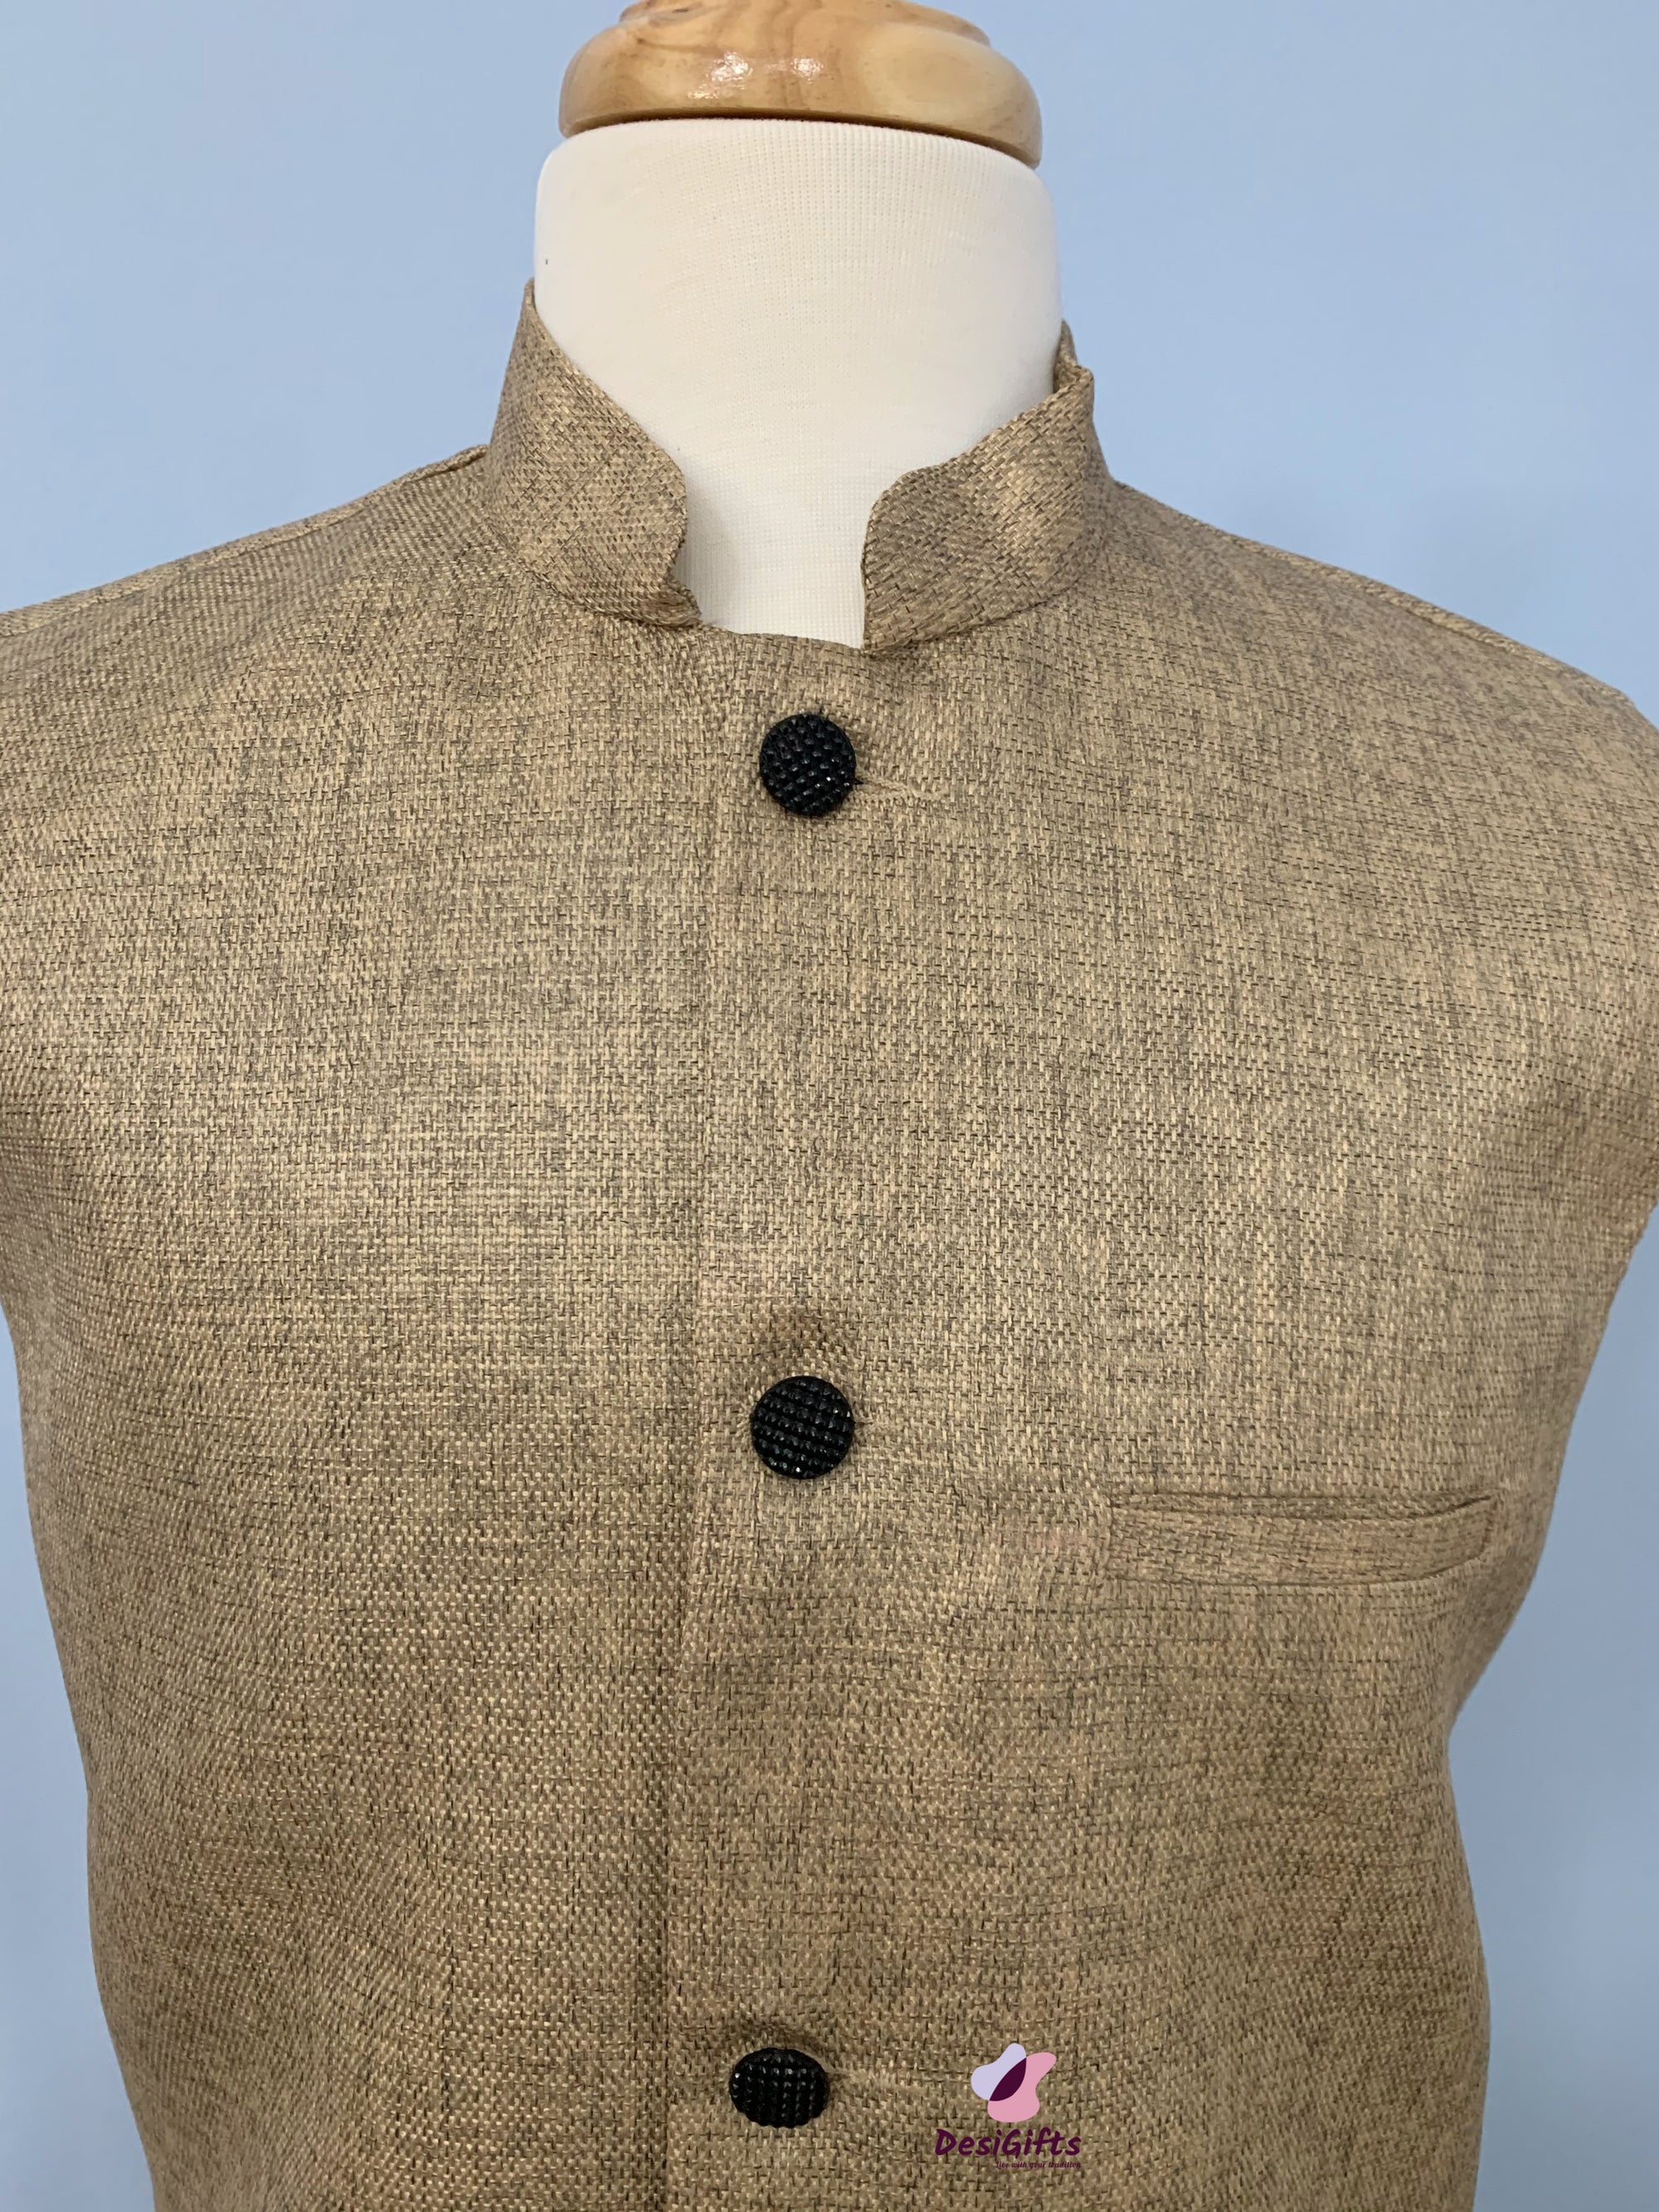 Woven Jute Cotton Nehru Style Jacket-Design MJ#BRN 358